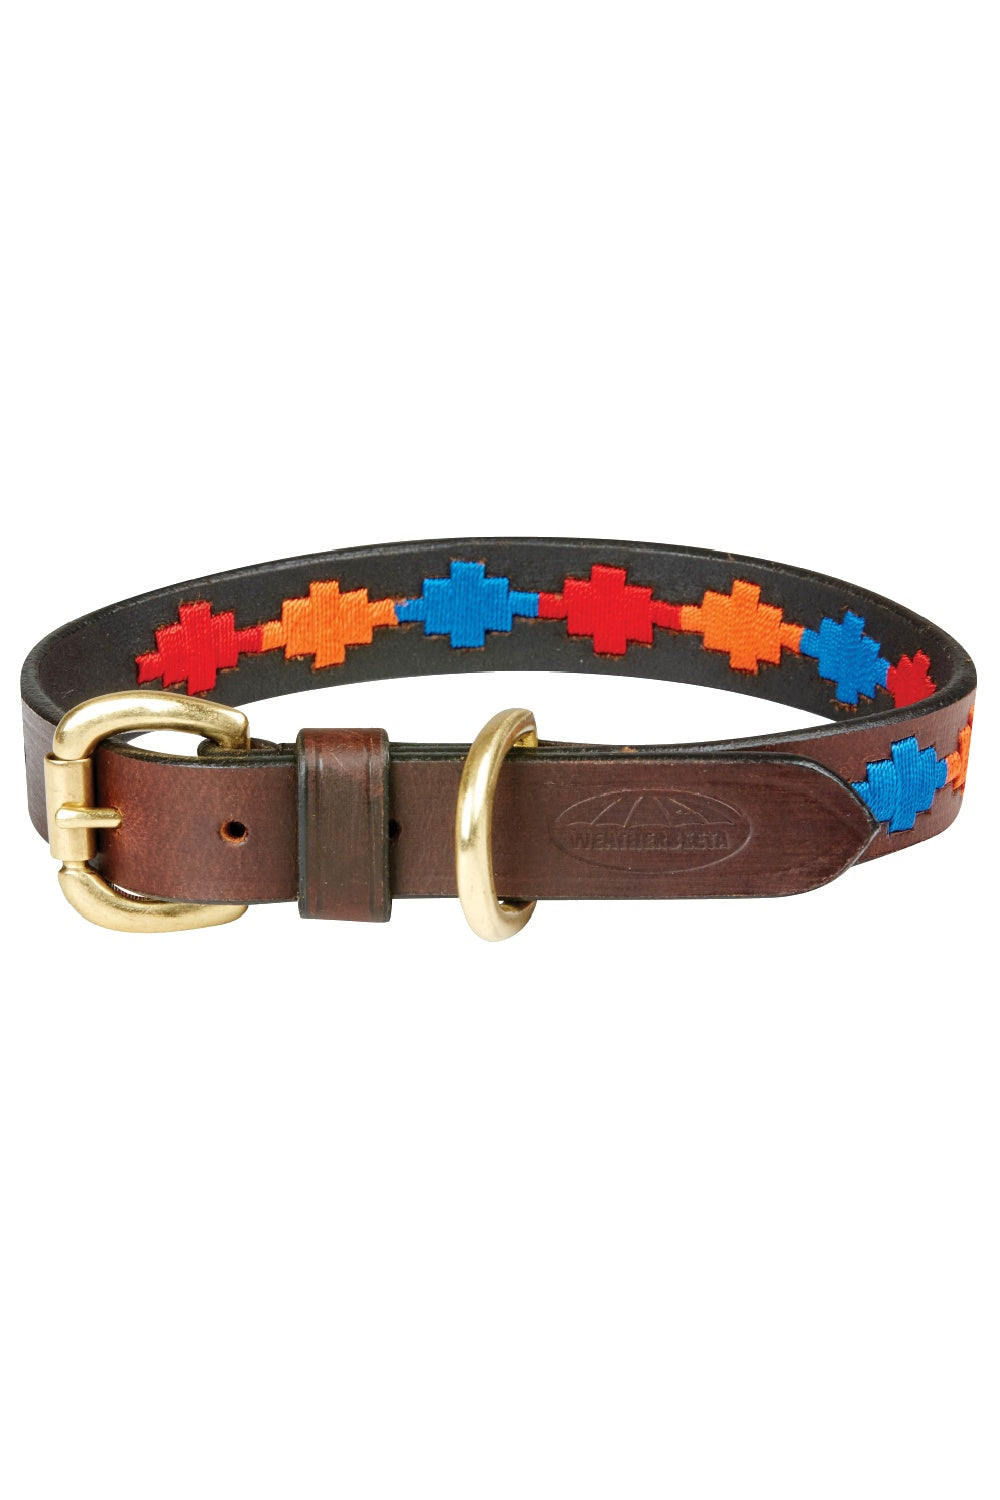 WeatherBeeta Polo Leather Dog Collar in Beaufort Brown/Red/Orange/Blue 